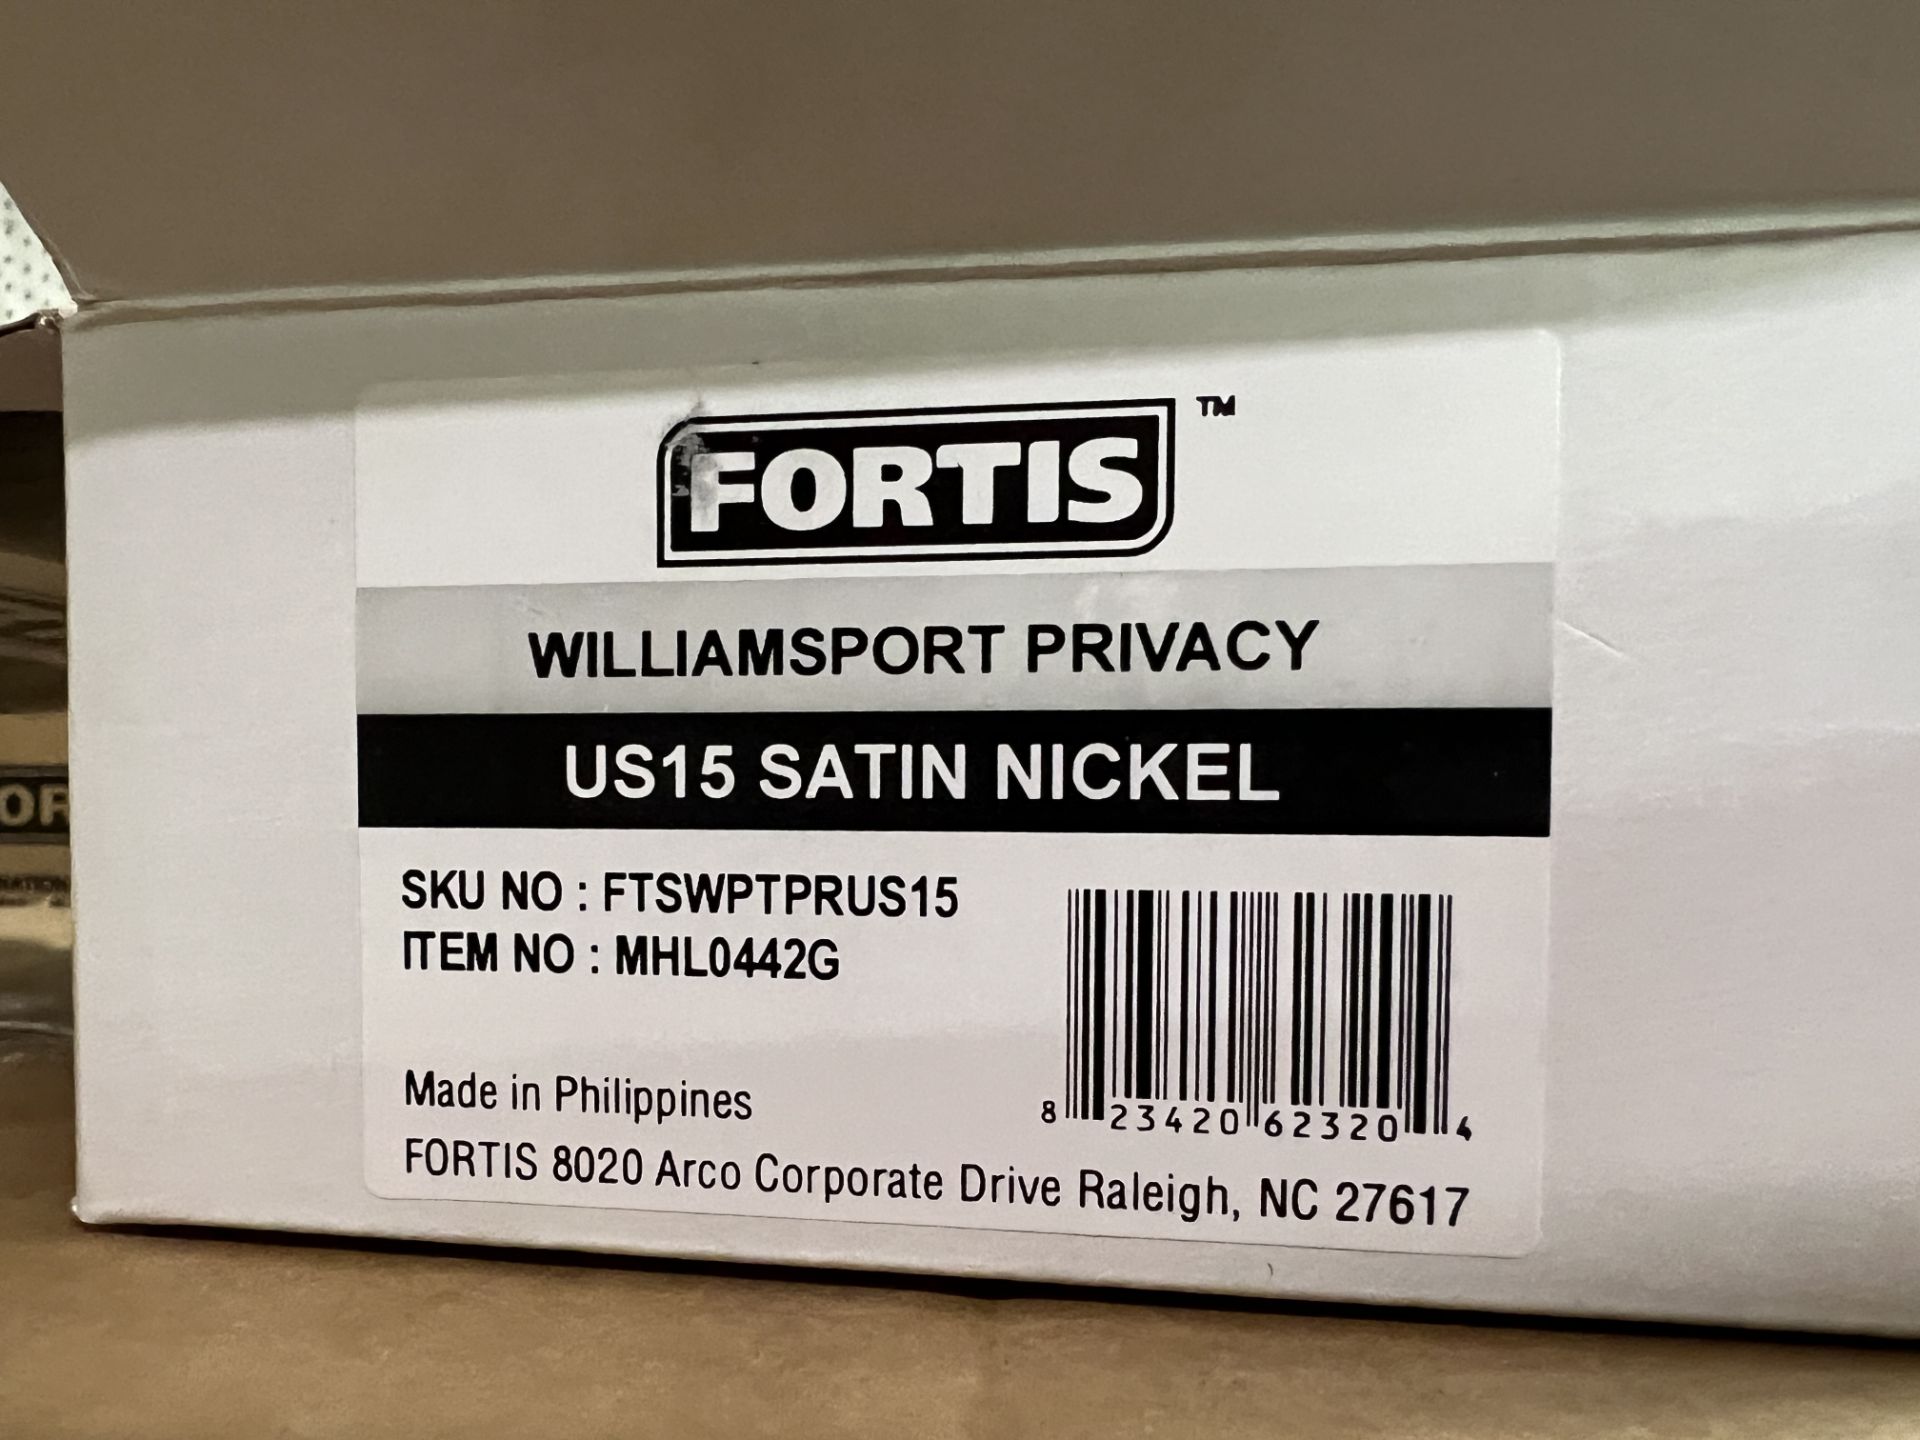 (20) FORTIS WILLIAMSPORT PRIVACY US15 SATIN NICKEL - Image 2 of 3